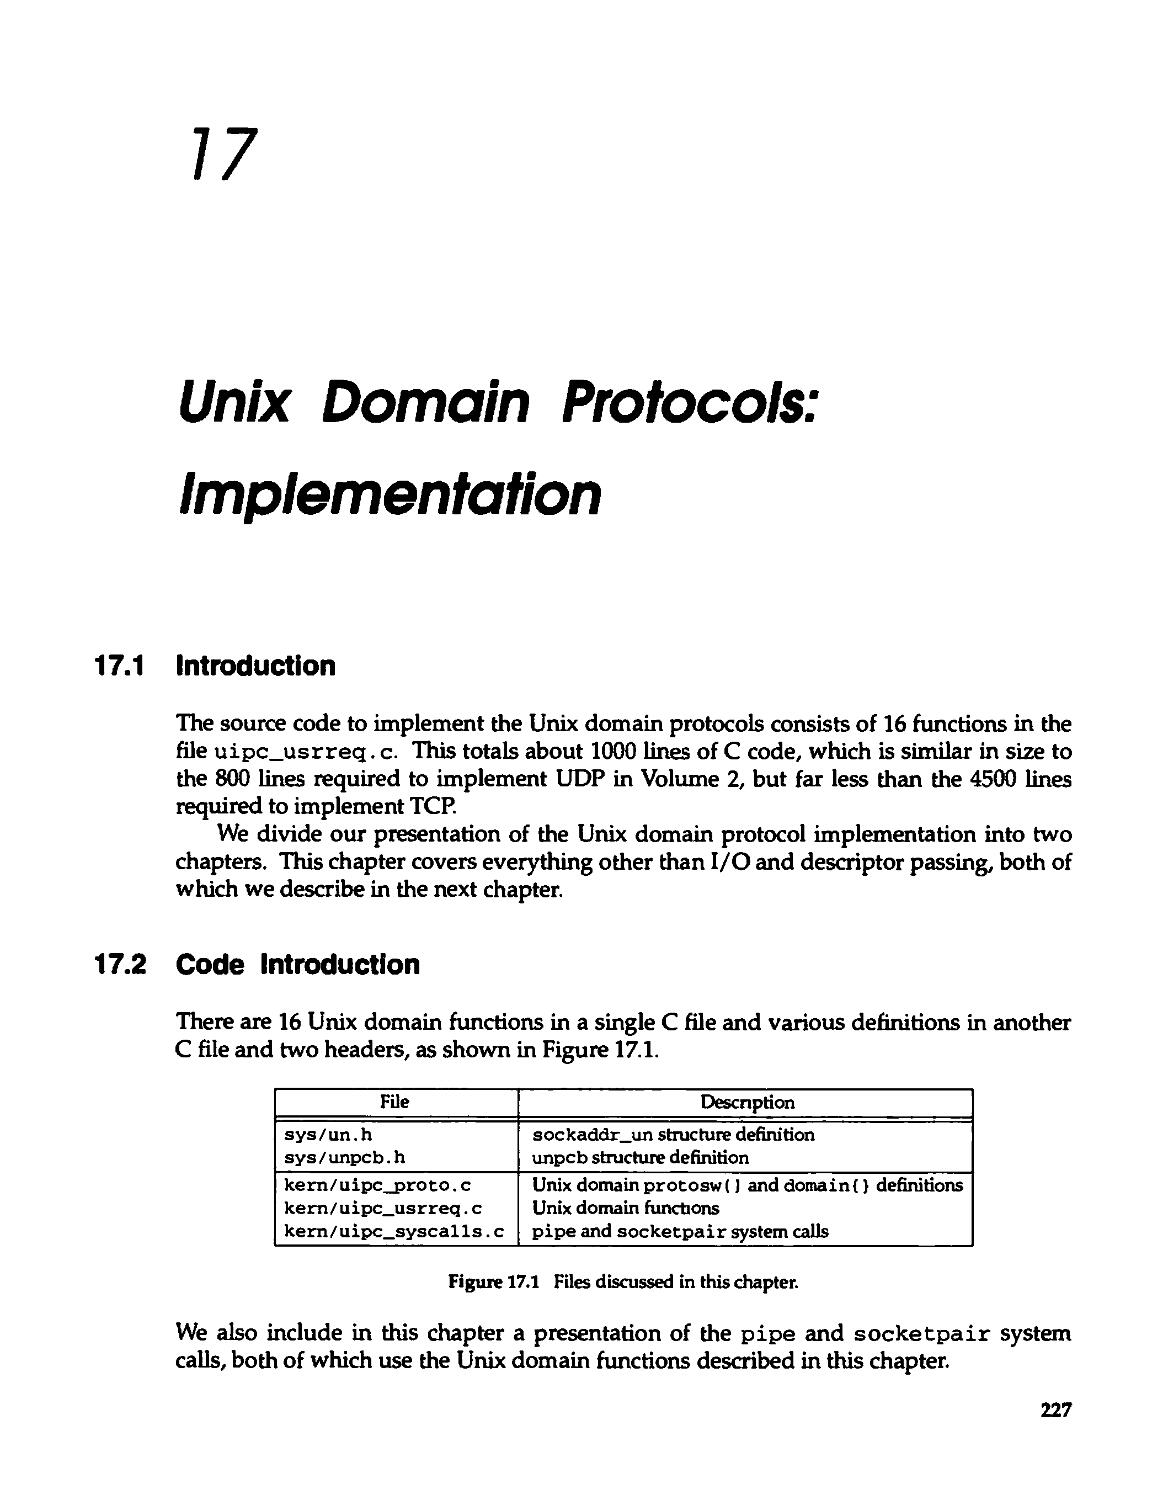 Chapter 17. Unix Domain Protocols: Implementation
17.2 Code Introduction